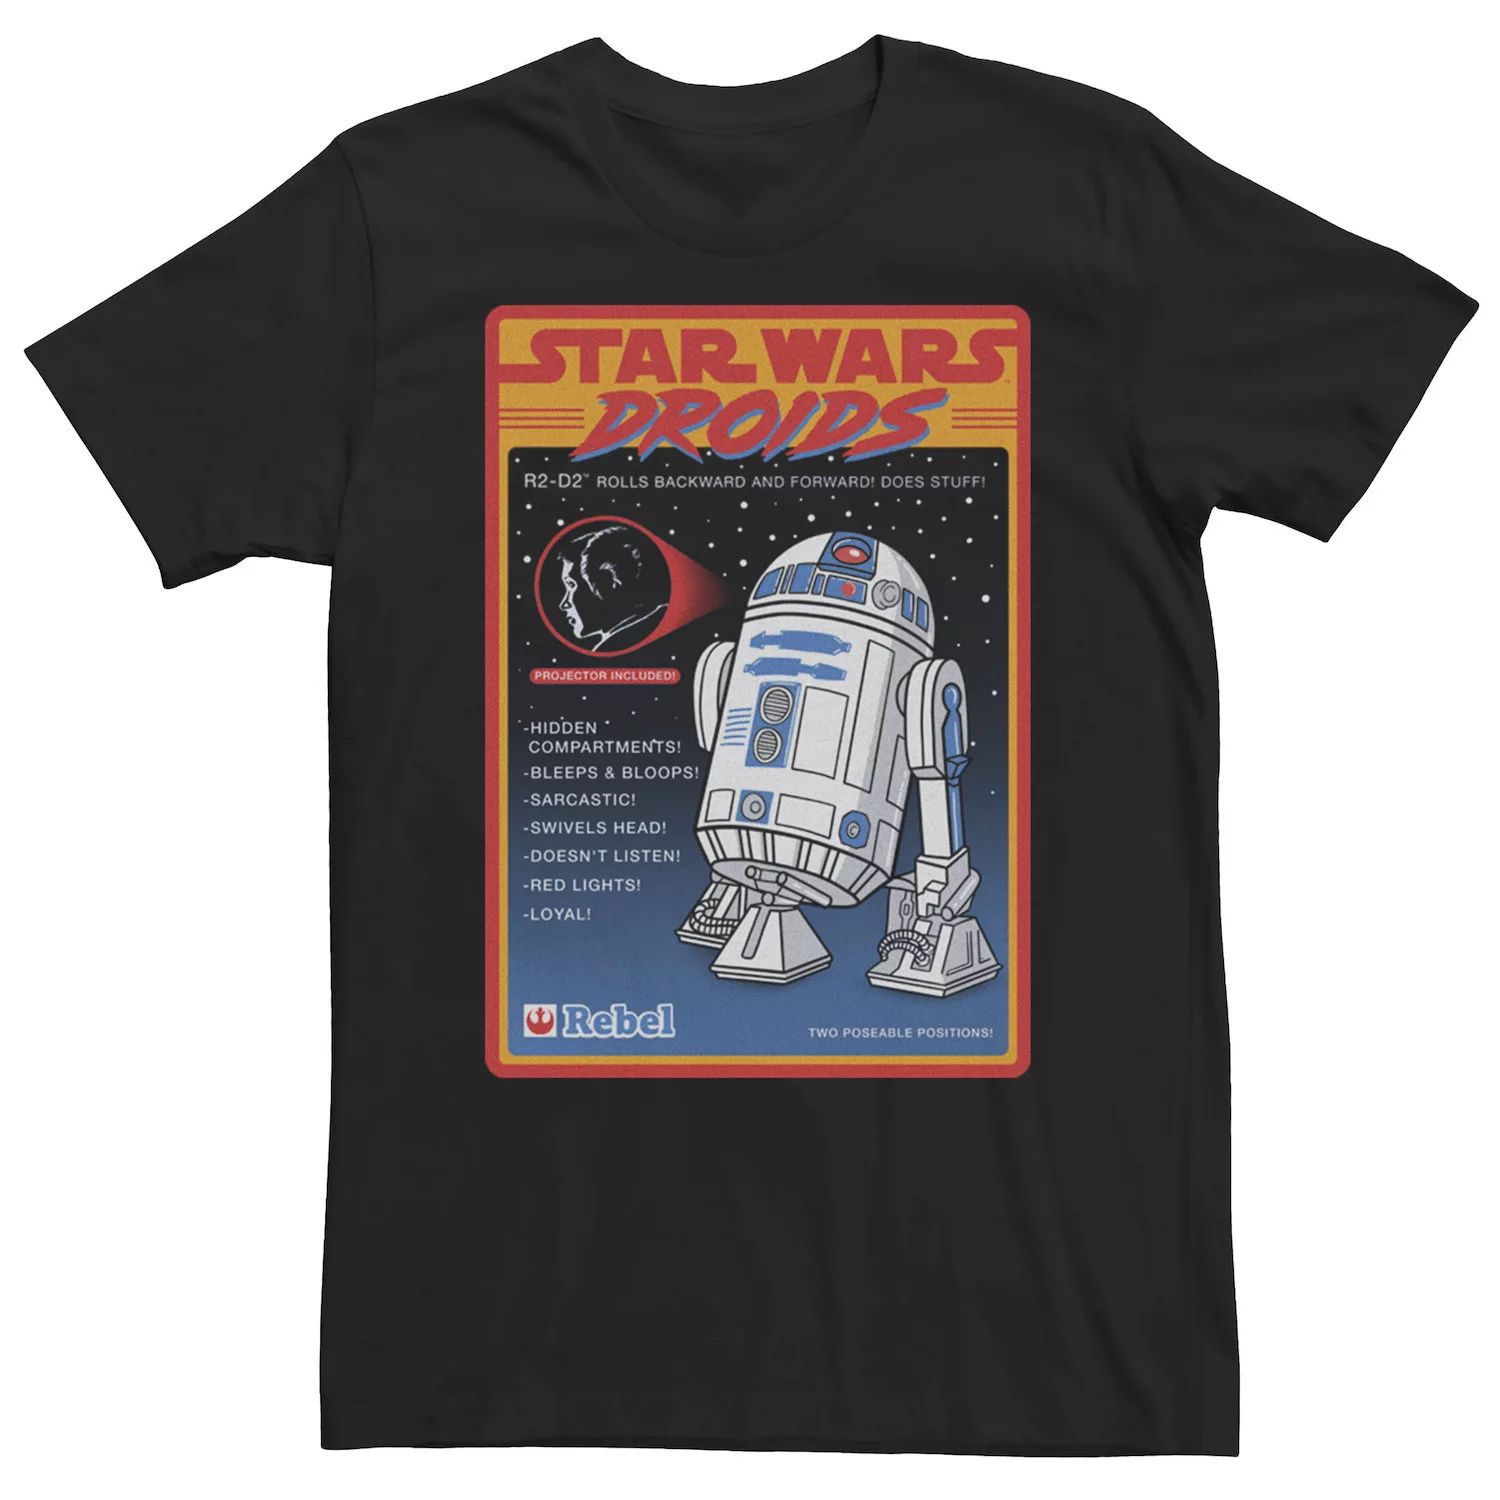 Мужская футболка с рекламным плакатом «Звездные войны дроиды» R2-D2 Star Wars